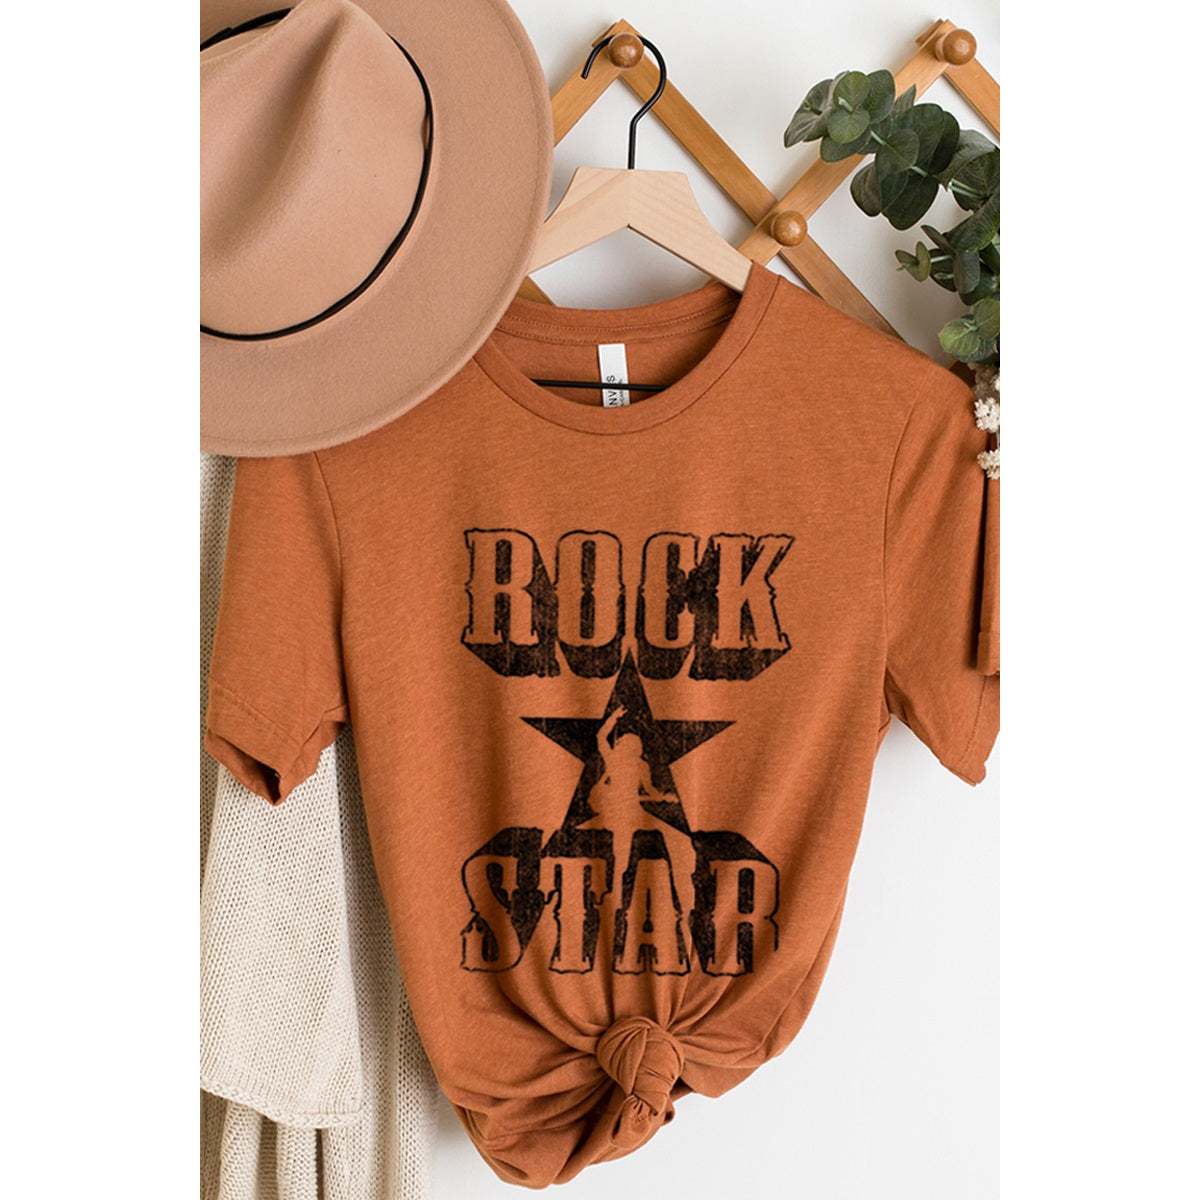 "Rock Star" Graphic Tee